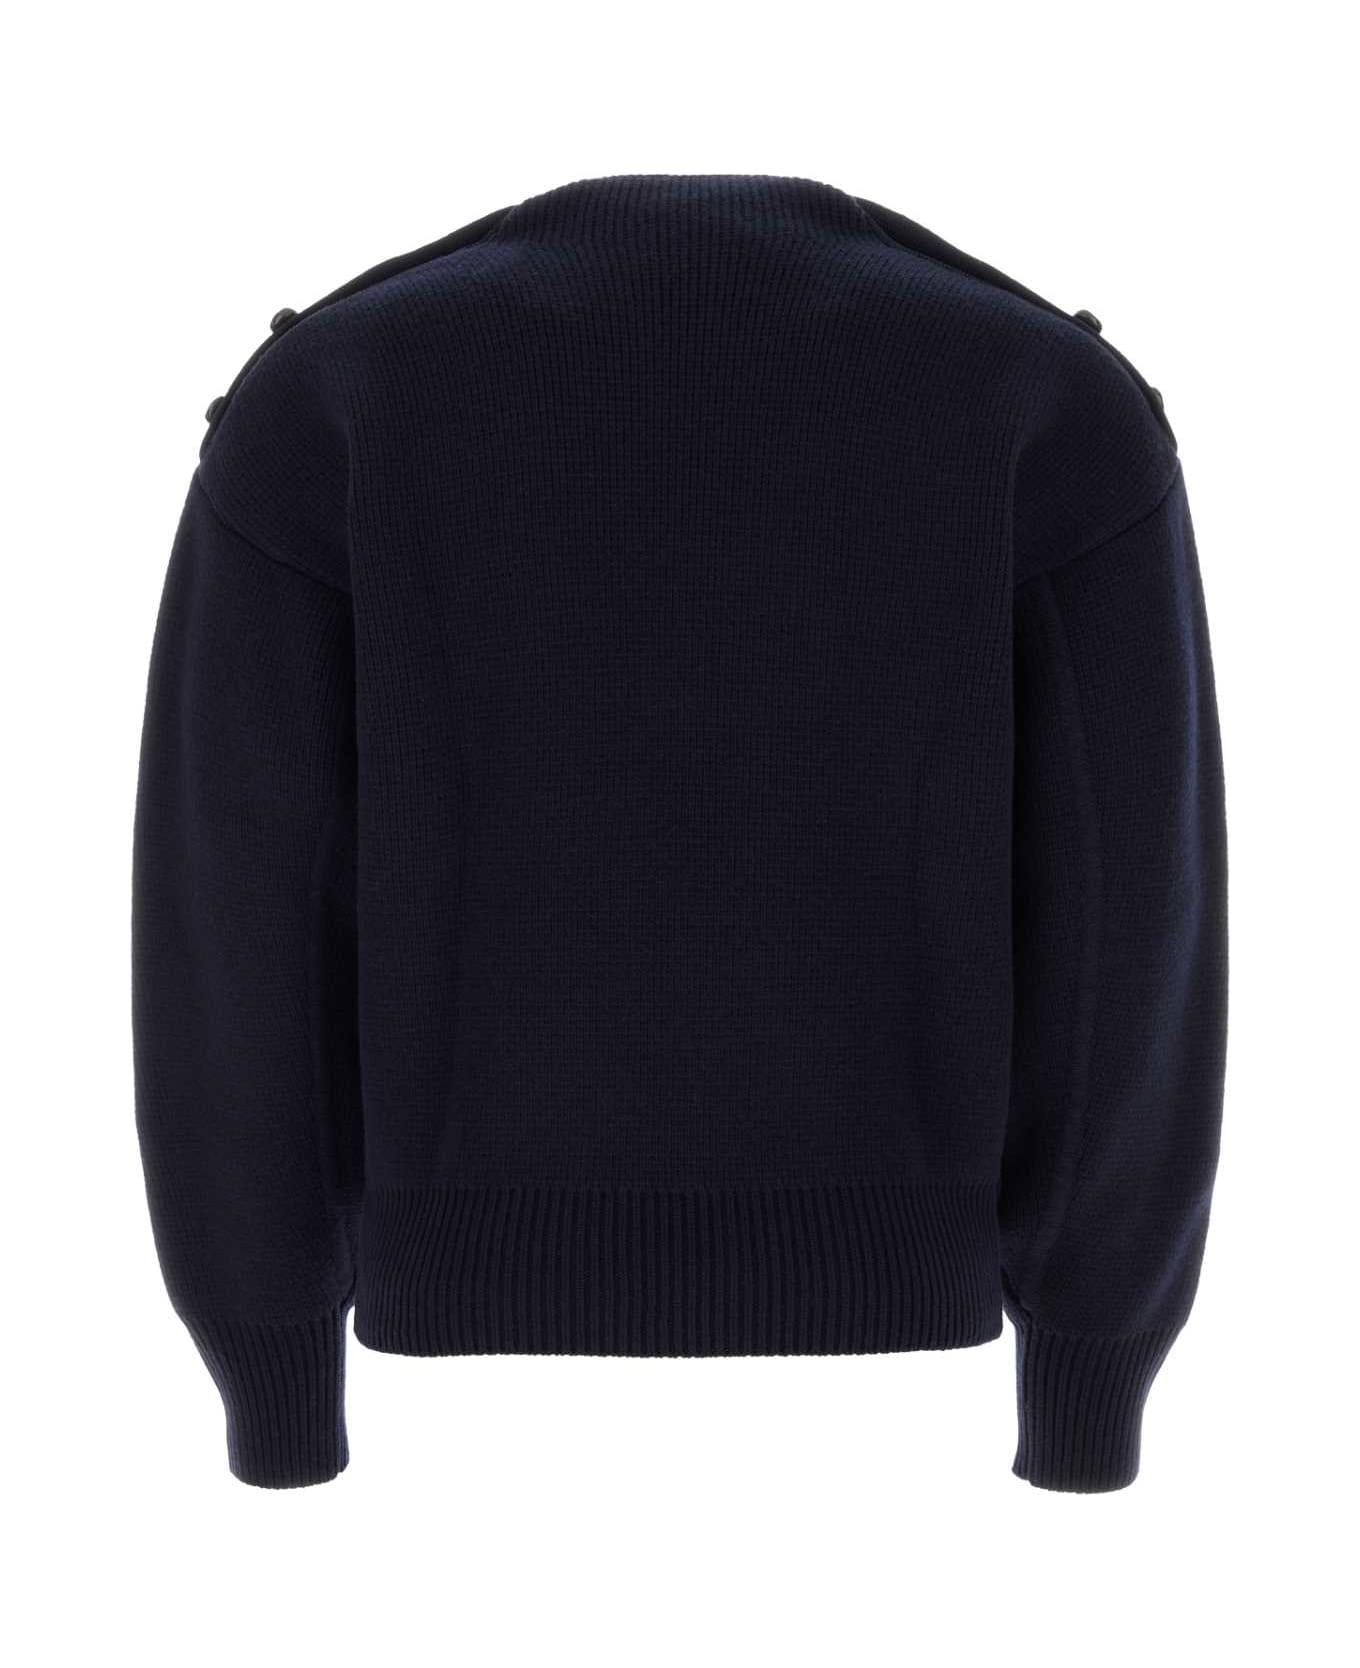 Ferragamo Midnight Blue Wool Blend Sweater - MIDNIGHT